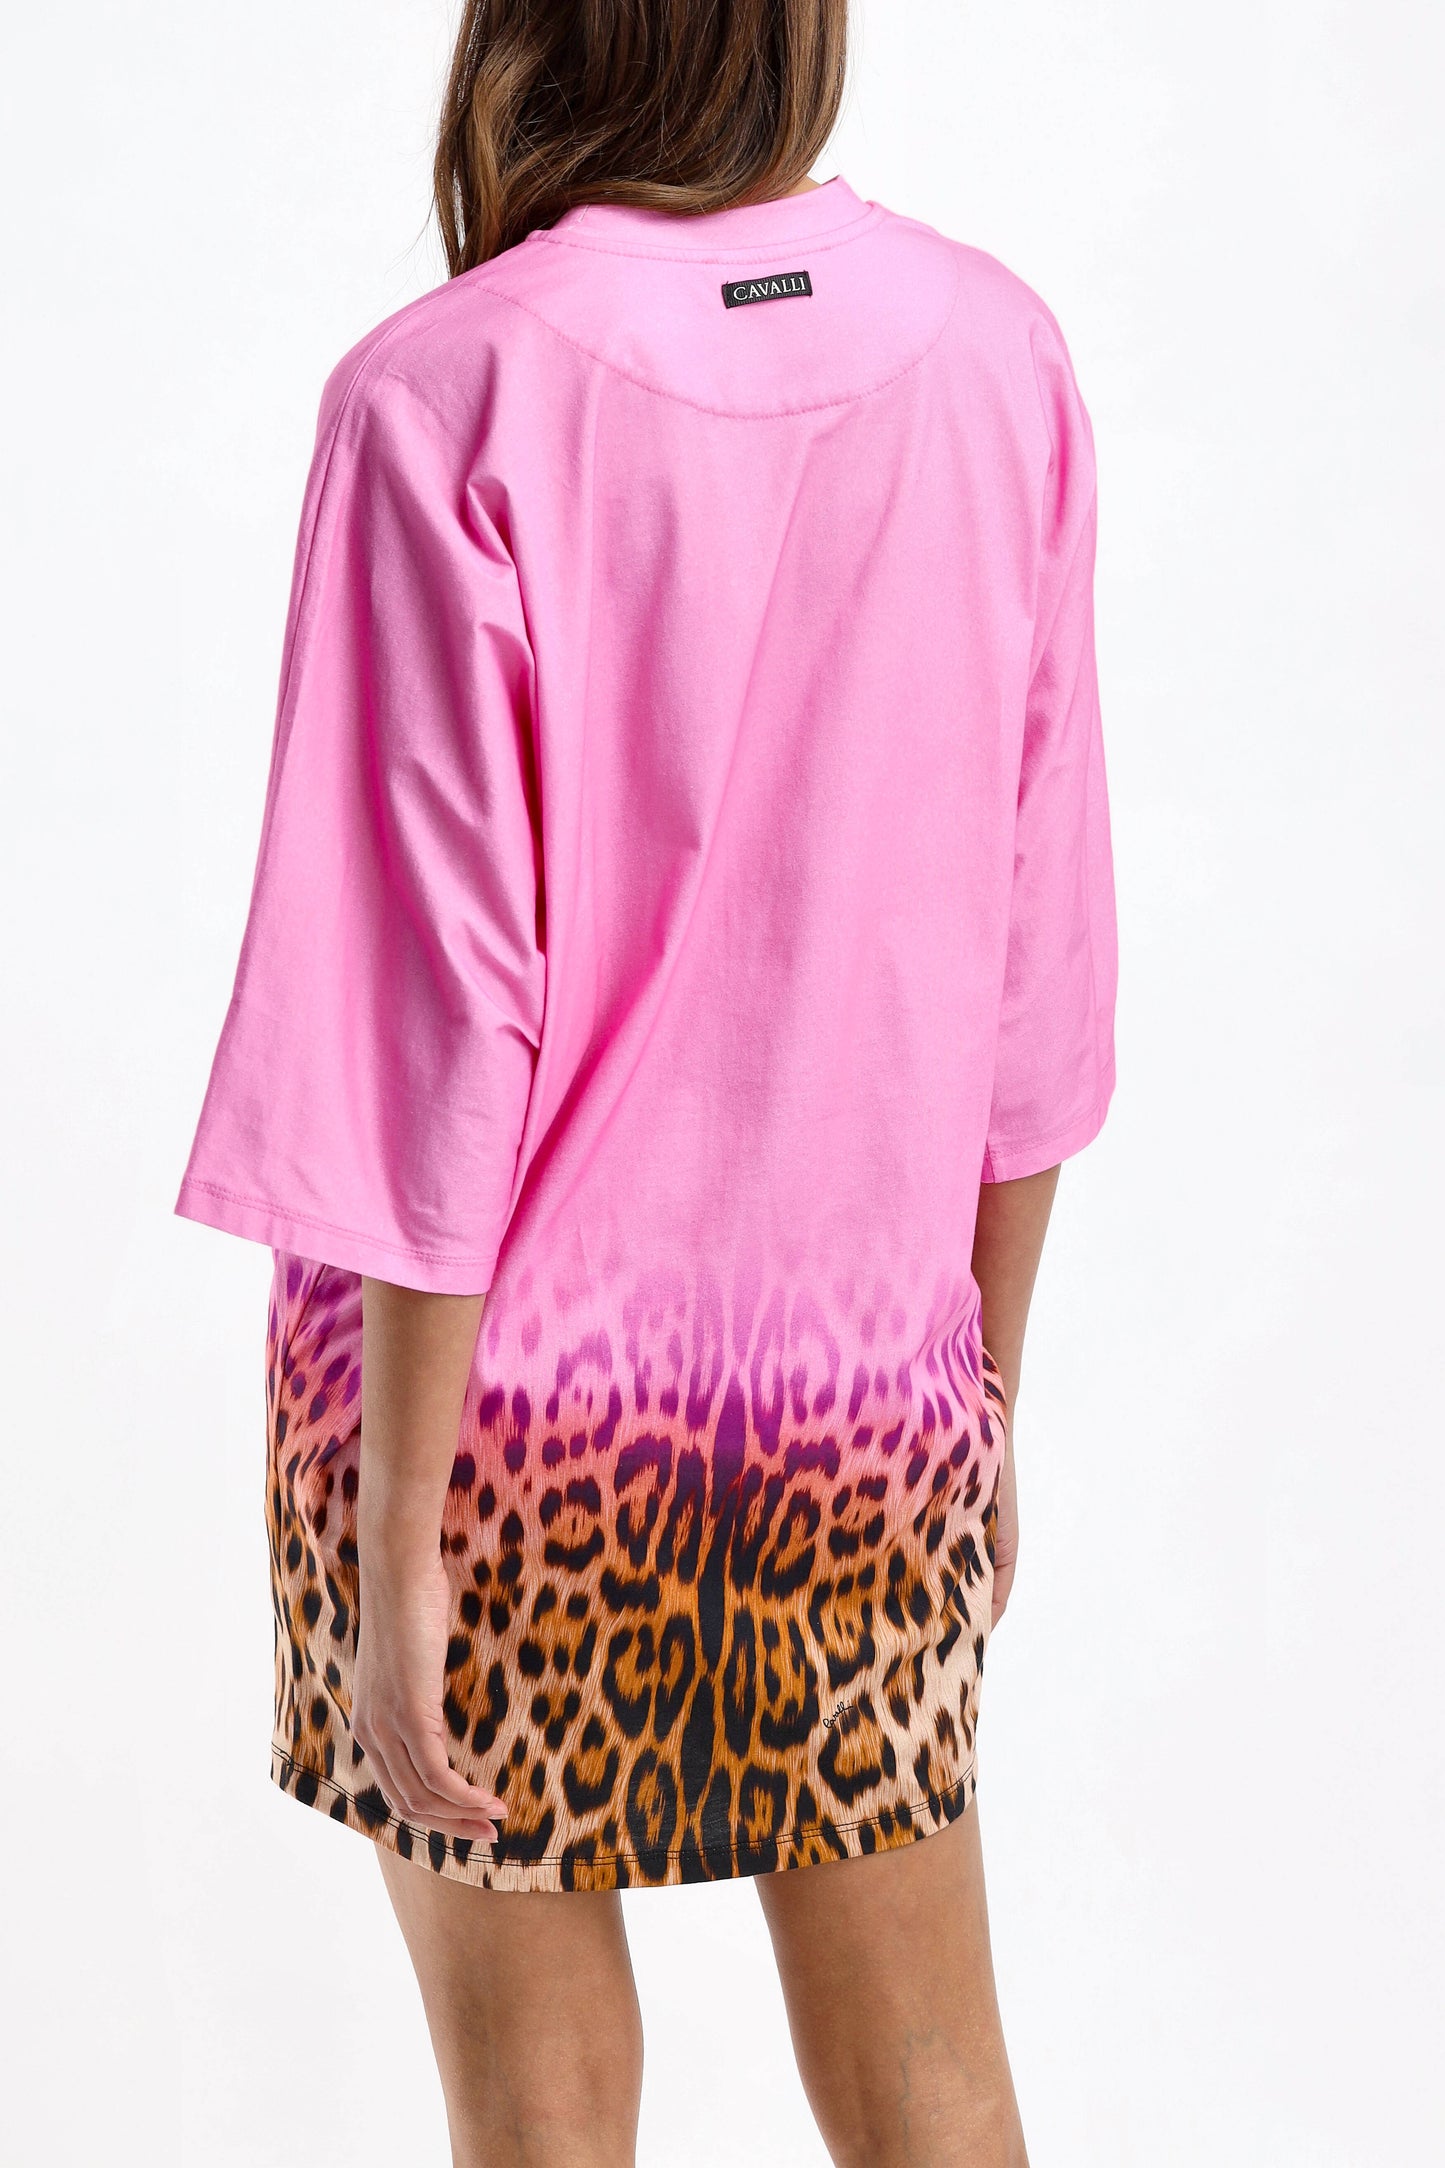 T-Shirt-Kleid Jaguar in PinkRoberto Cavalli - Anita Hass